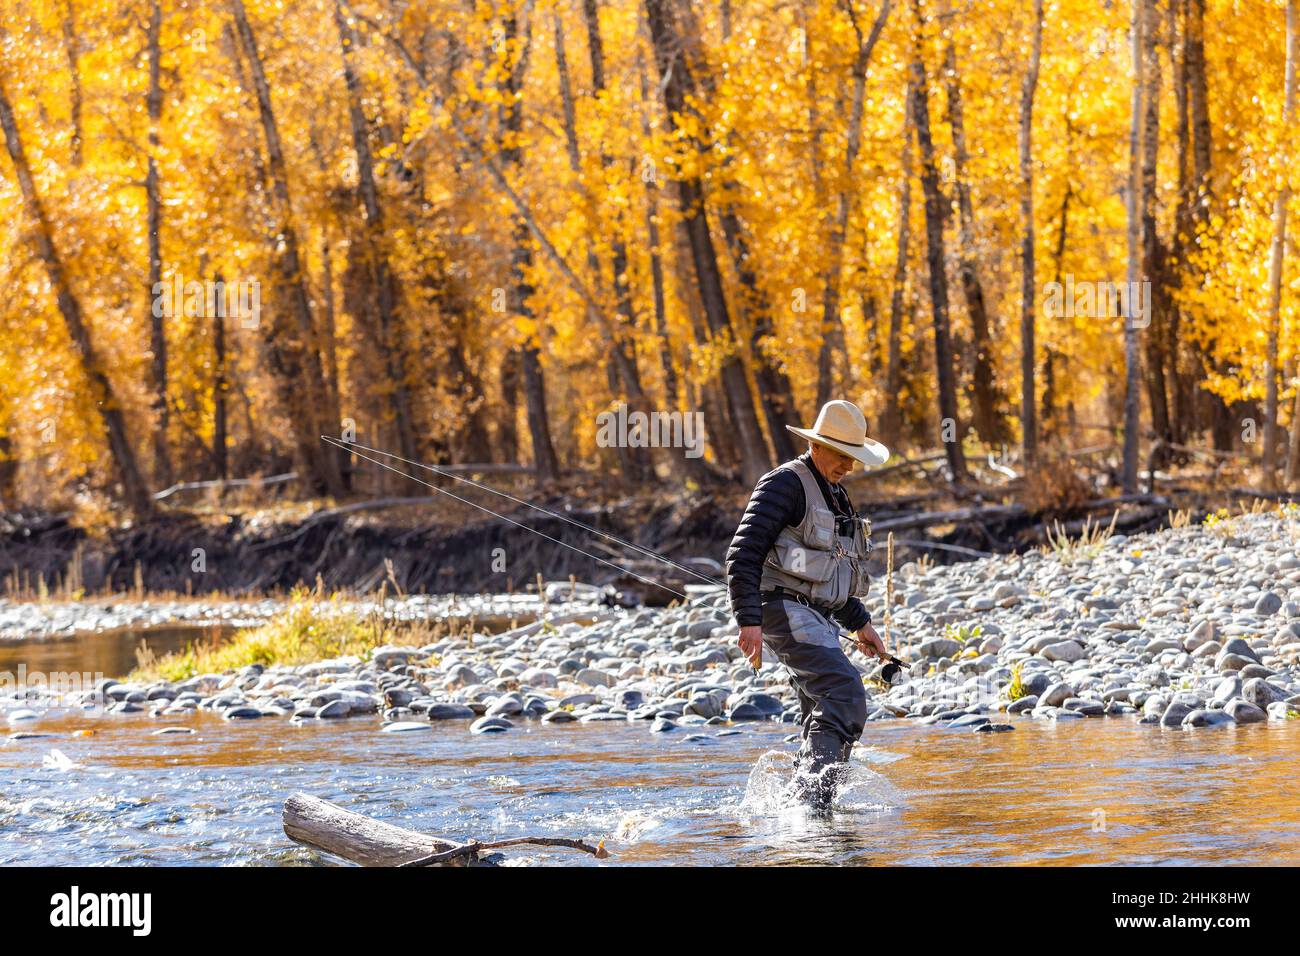 USA, Idaho, Bellevue, Senior fisherman wading in Big Wood River in Autumn Stock Photo